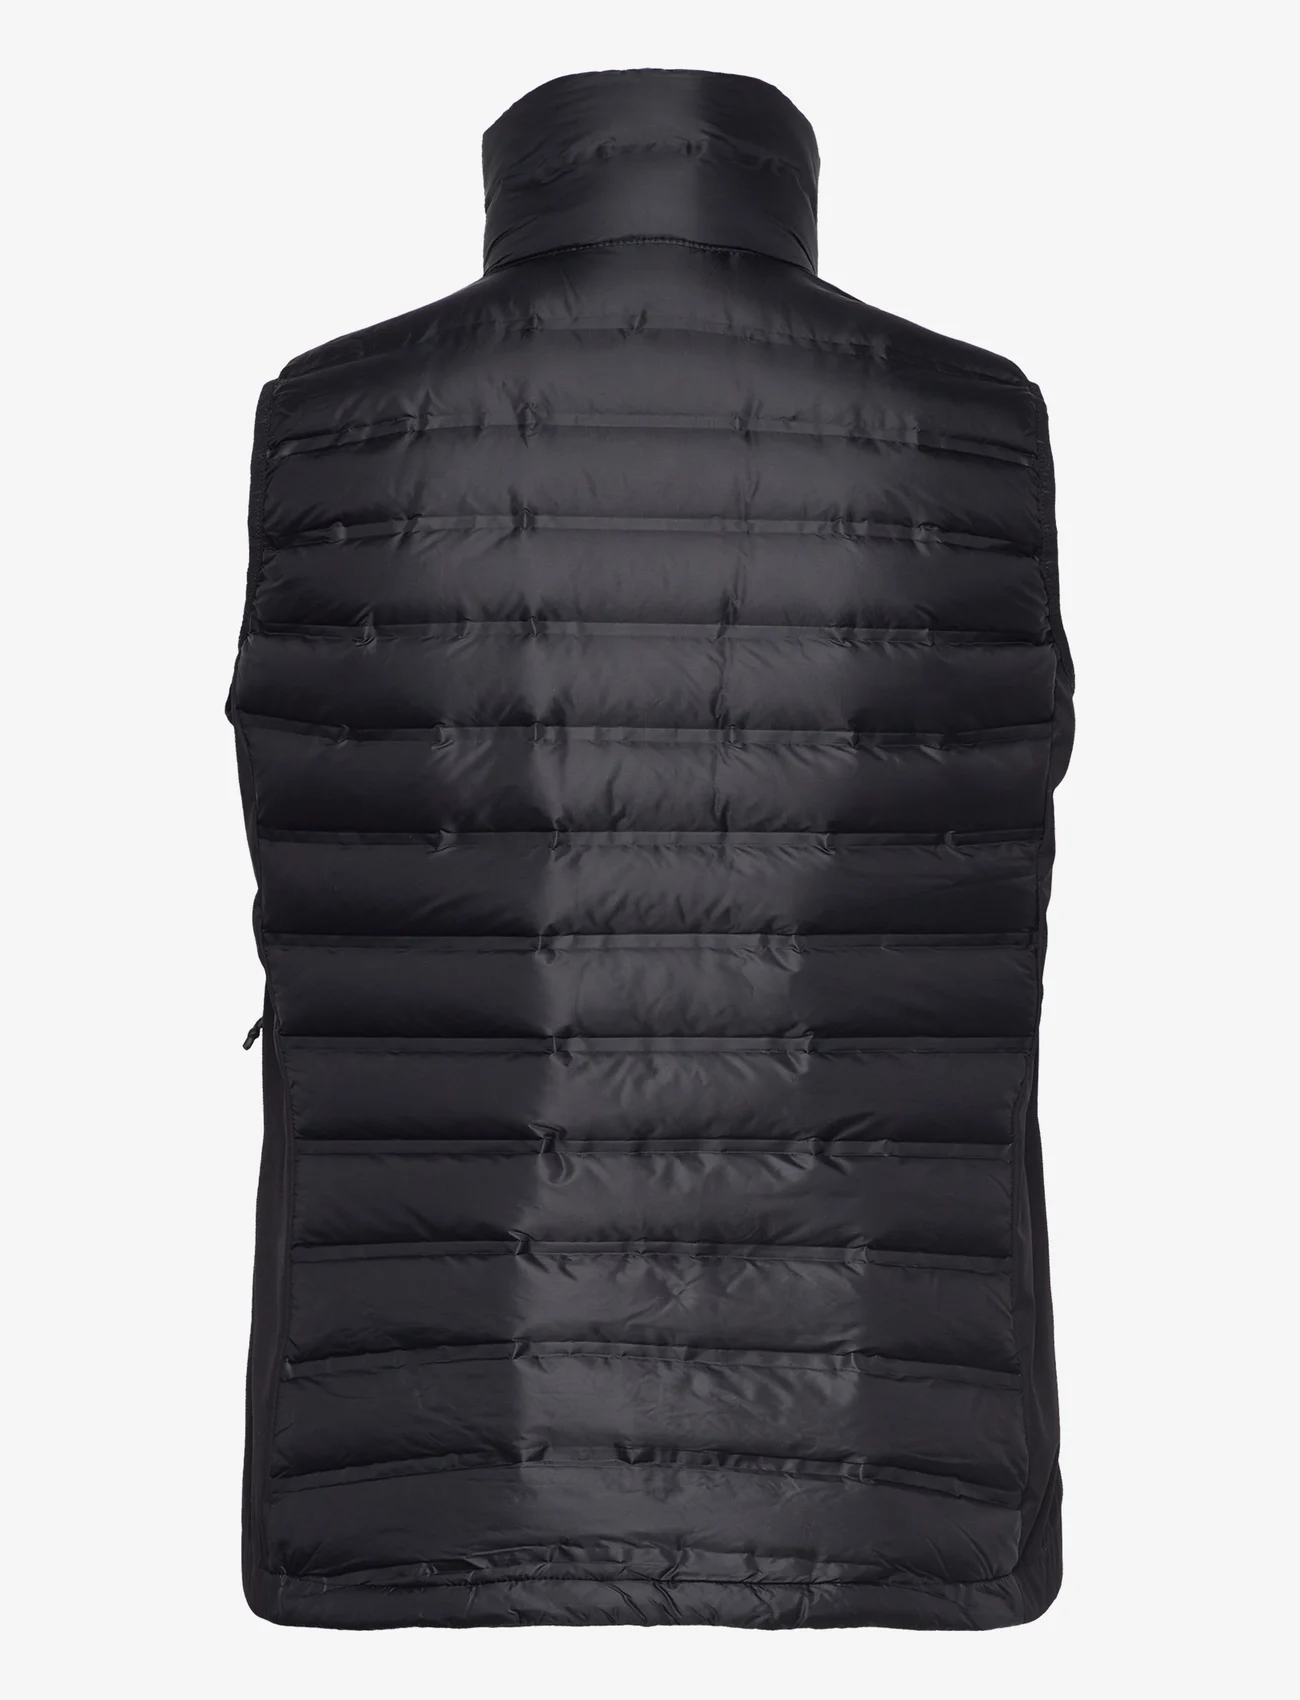 Tenson - TXlite Down Vest Women - puffer vests - black - 1